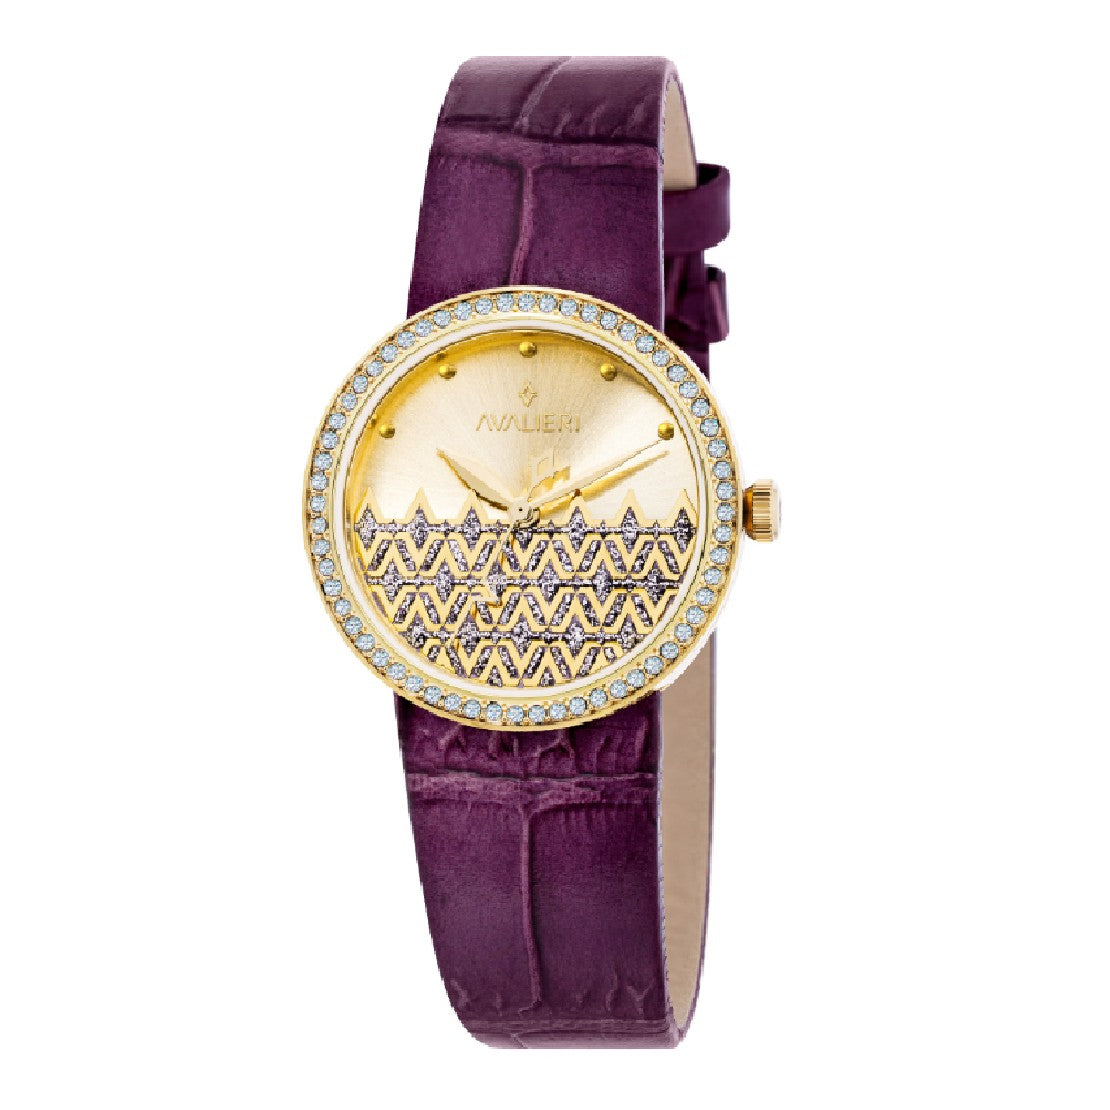 Avalieri Women's Quartz Watch Gold Dial - AV-2399B